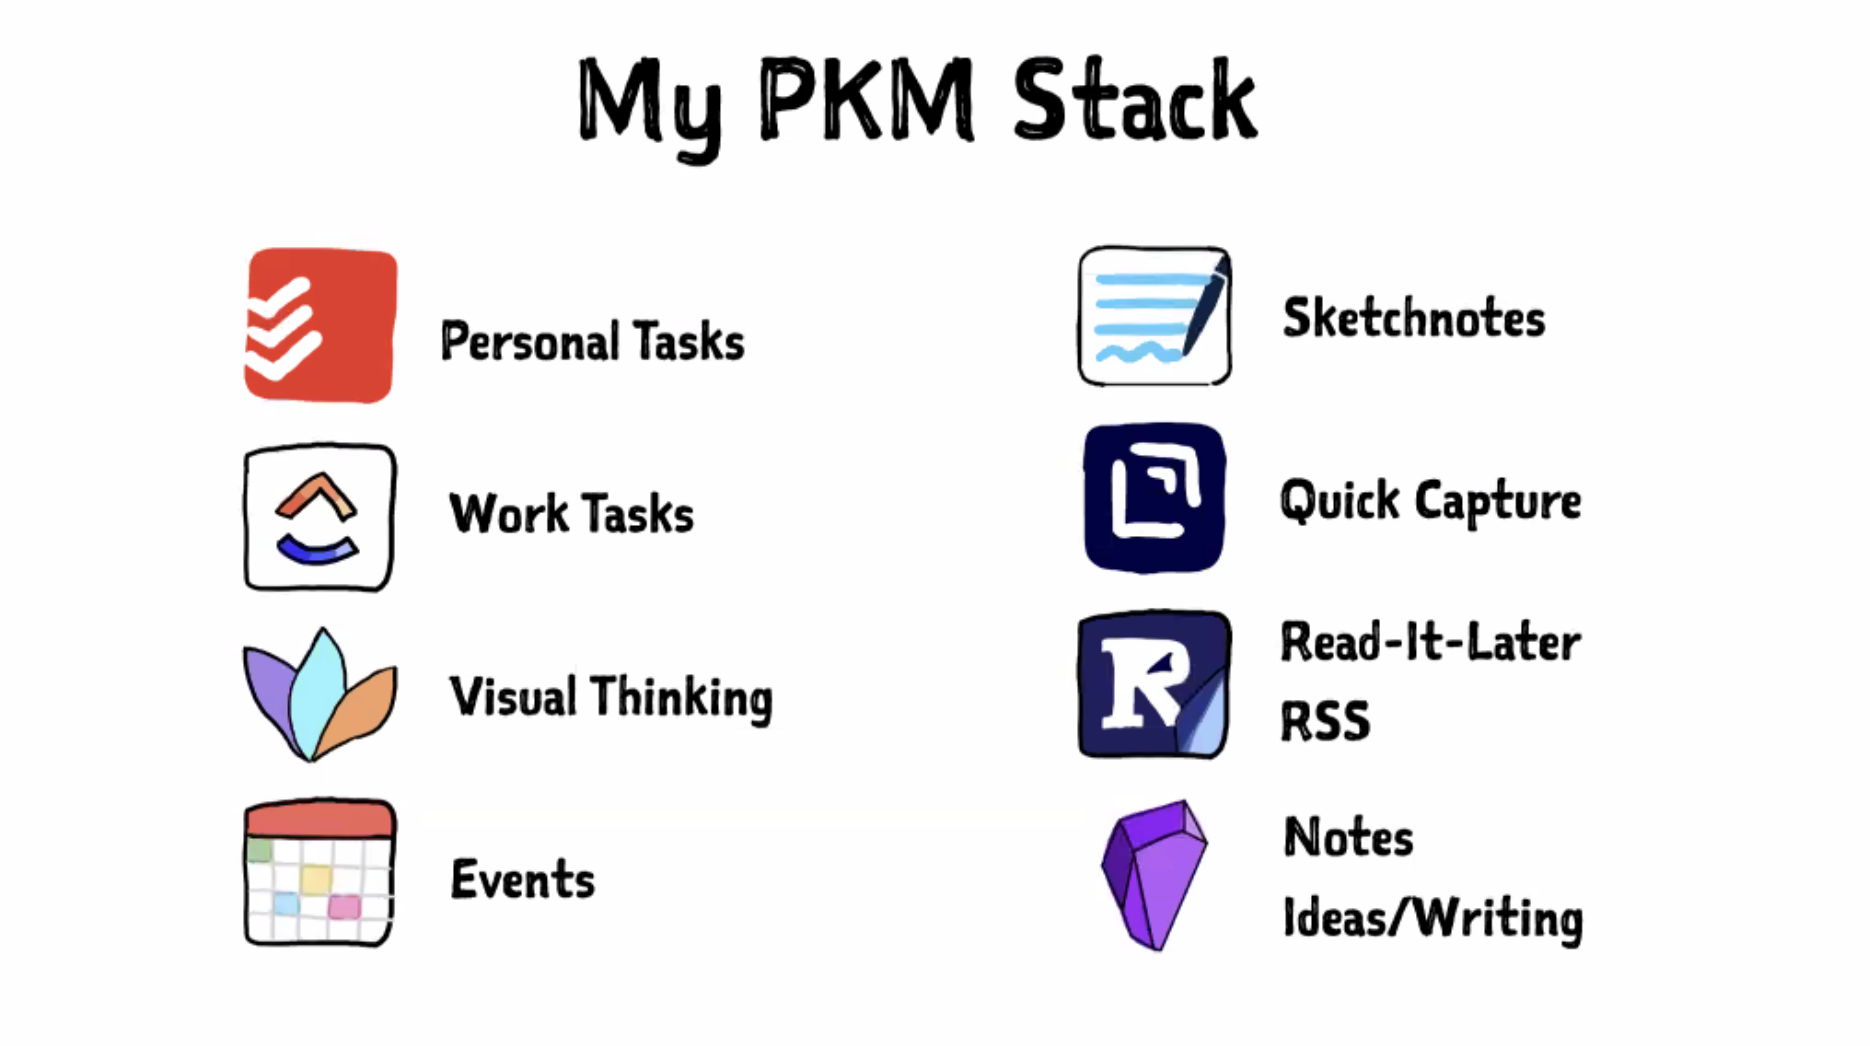 My PKM Stack